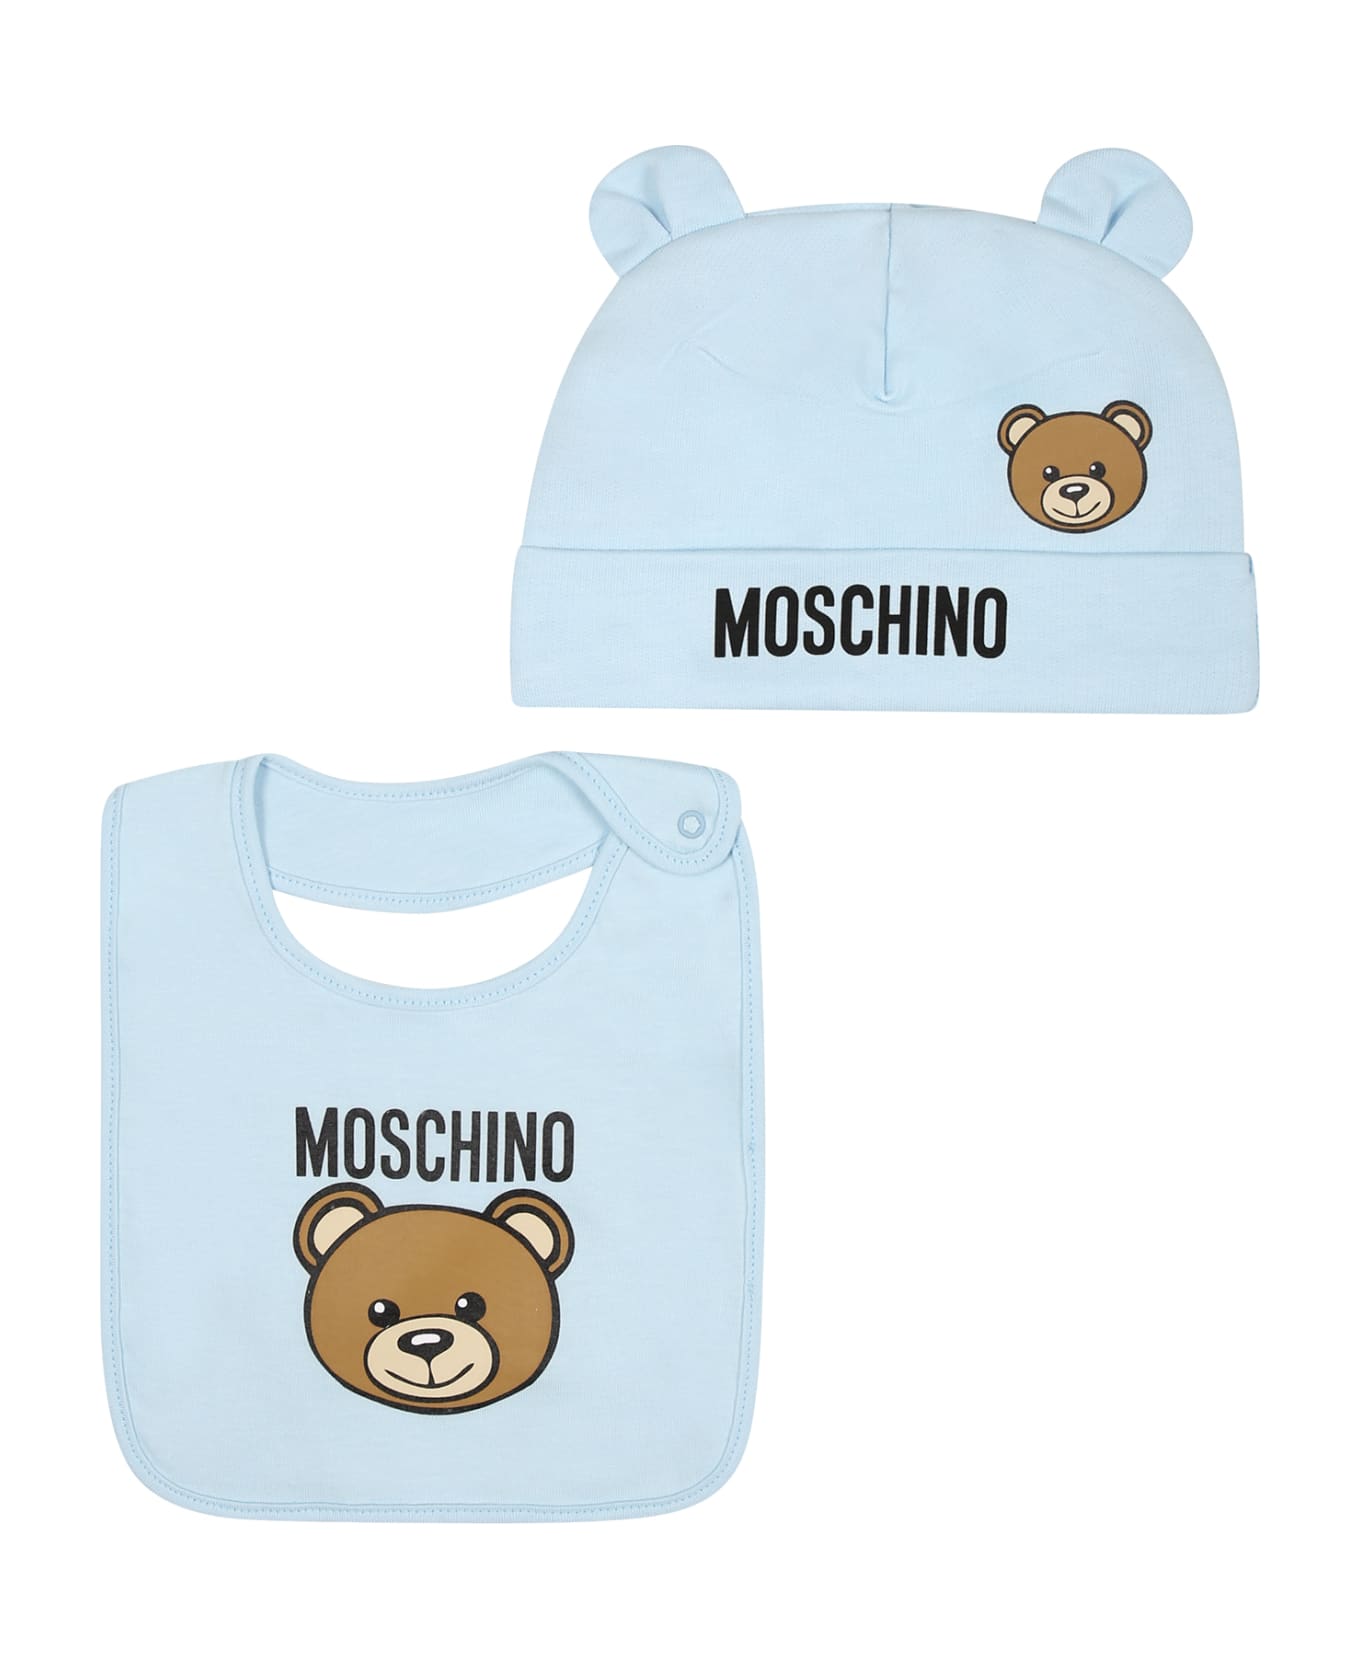 Moschino Light Blue Set For Baby Boy With Teddy Bear - Light Blue